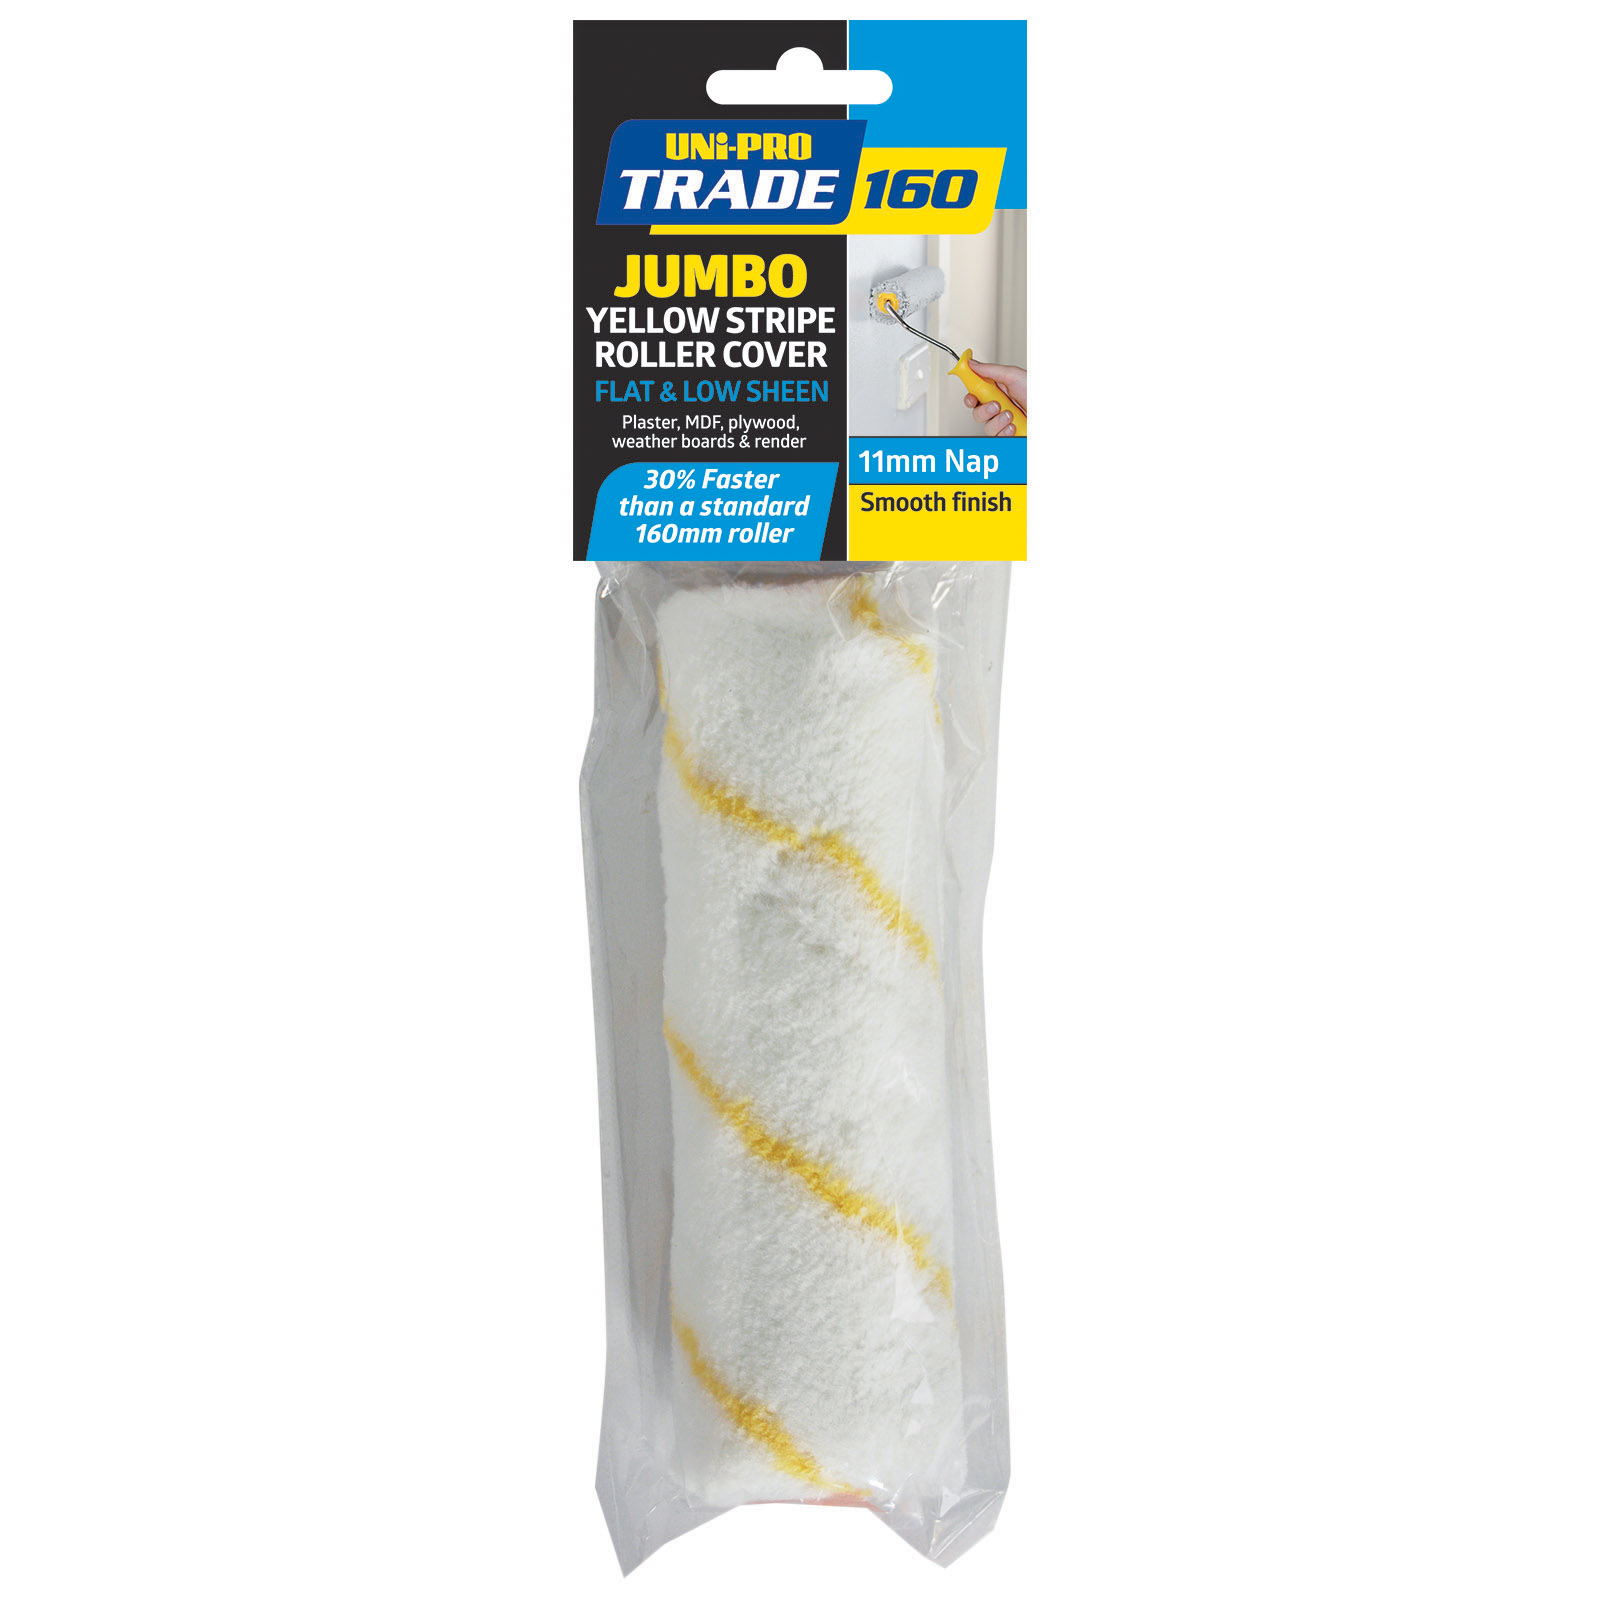 UNi-PRO Trade Jumbo Core Yellow Stripe Cover - 11mm nap